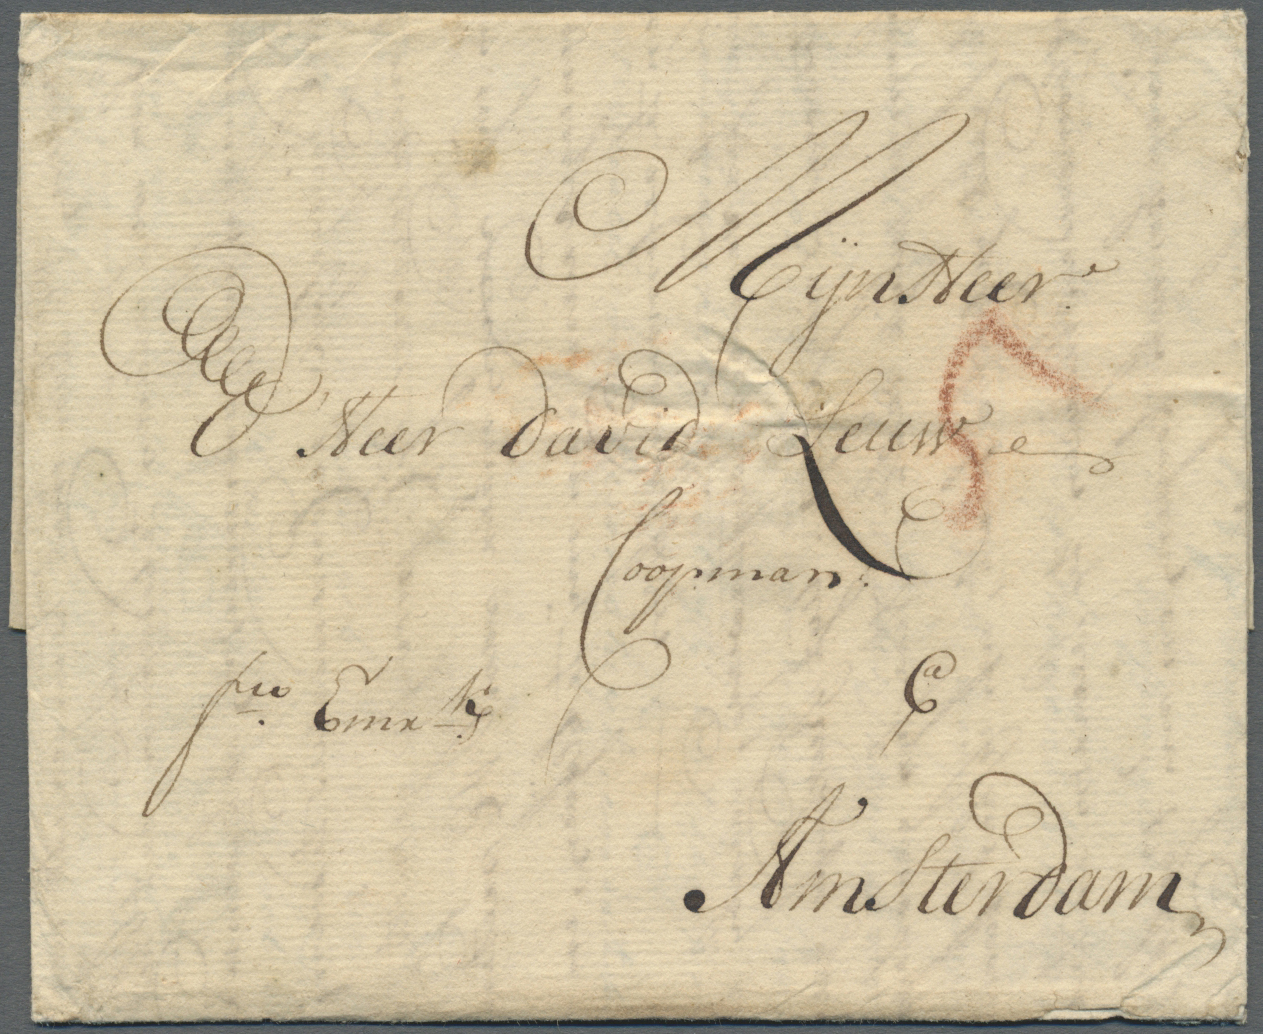 Br Lettland - Vorphilatelie: 1720, Folded Letter From RIGA To Amsterdam With Handwritten "Frco. Emm." (franco Emm - Latvia